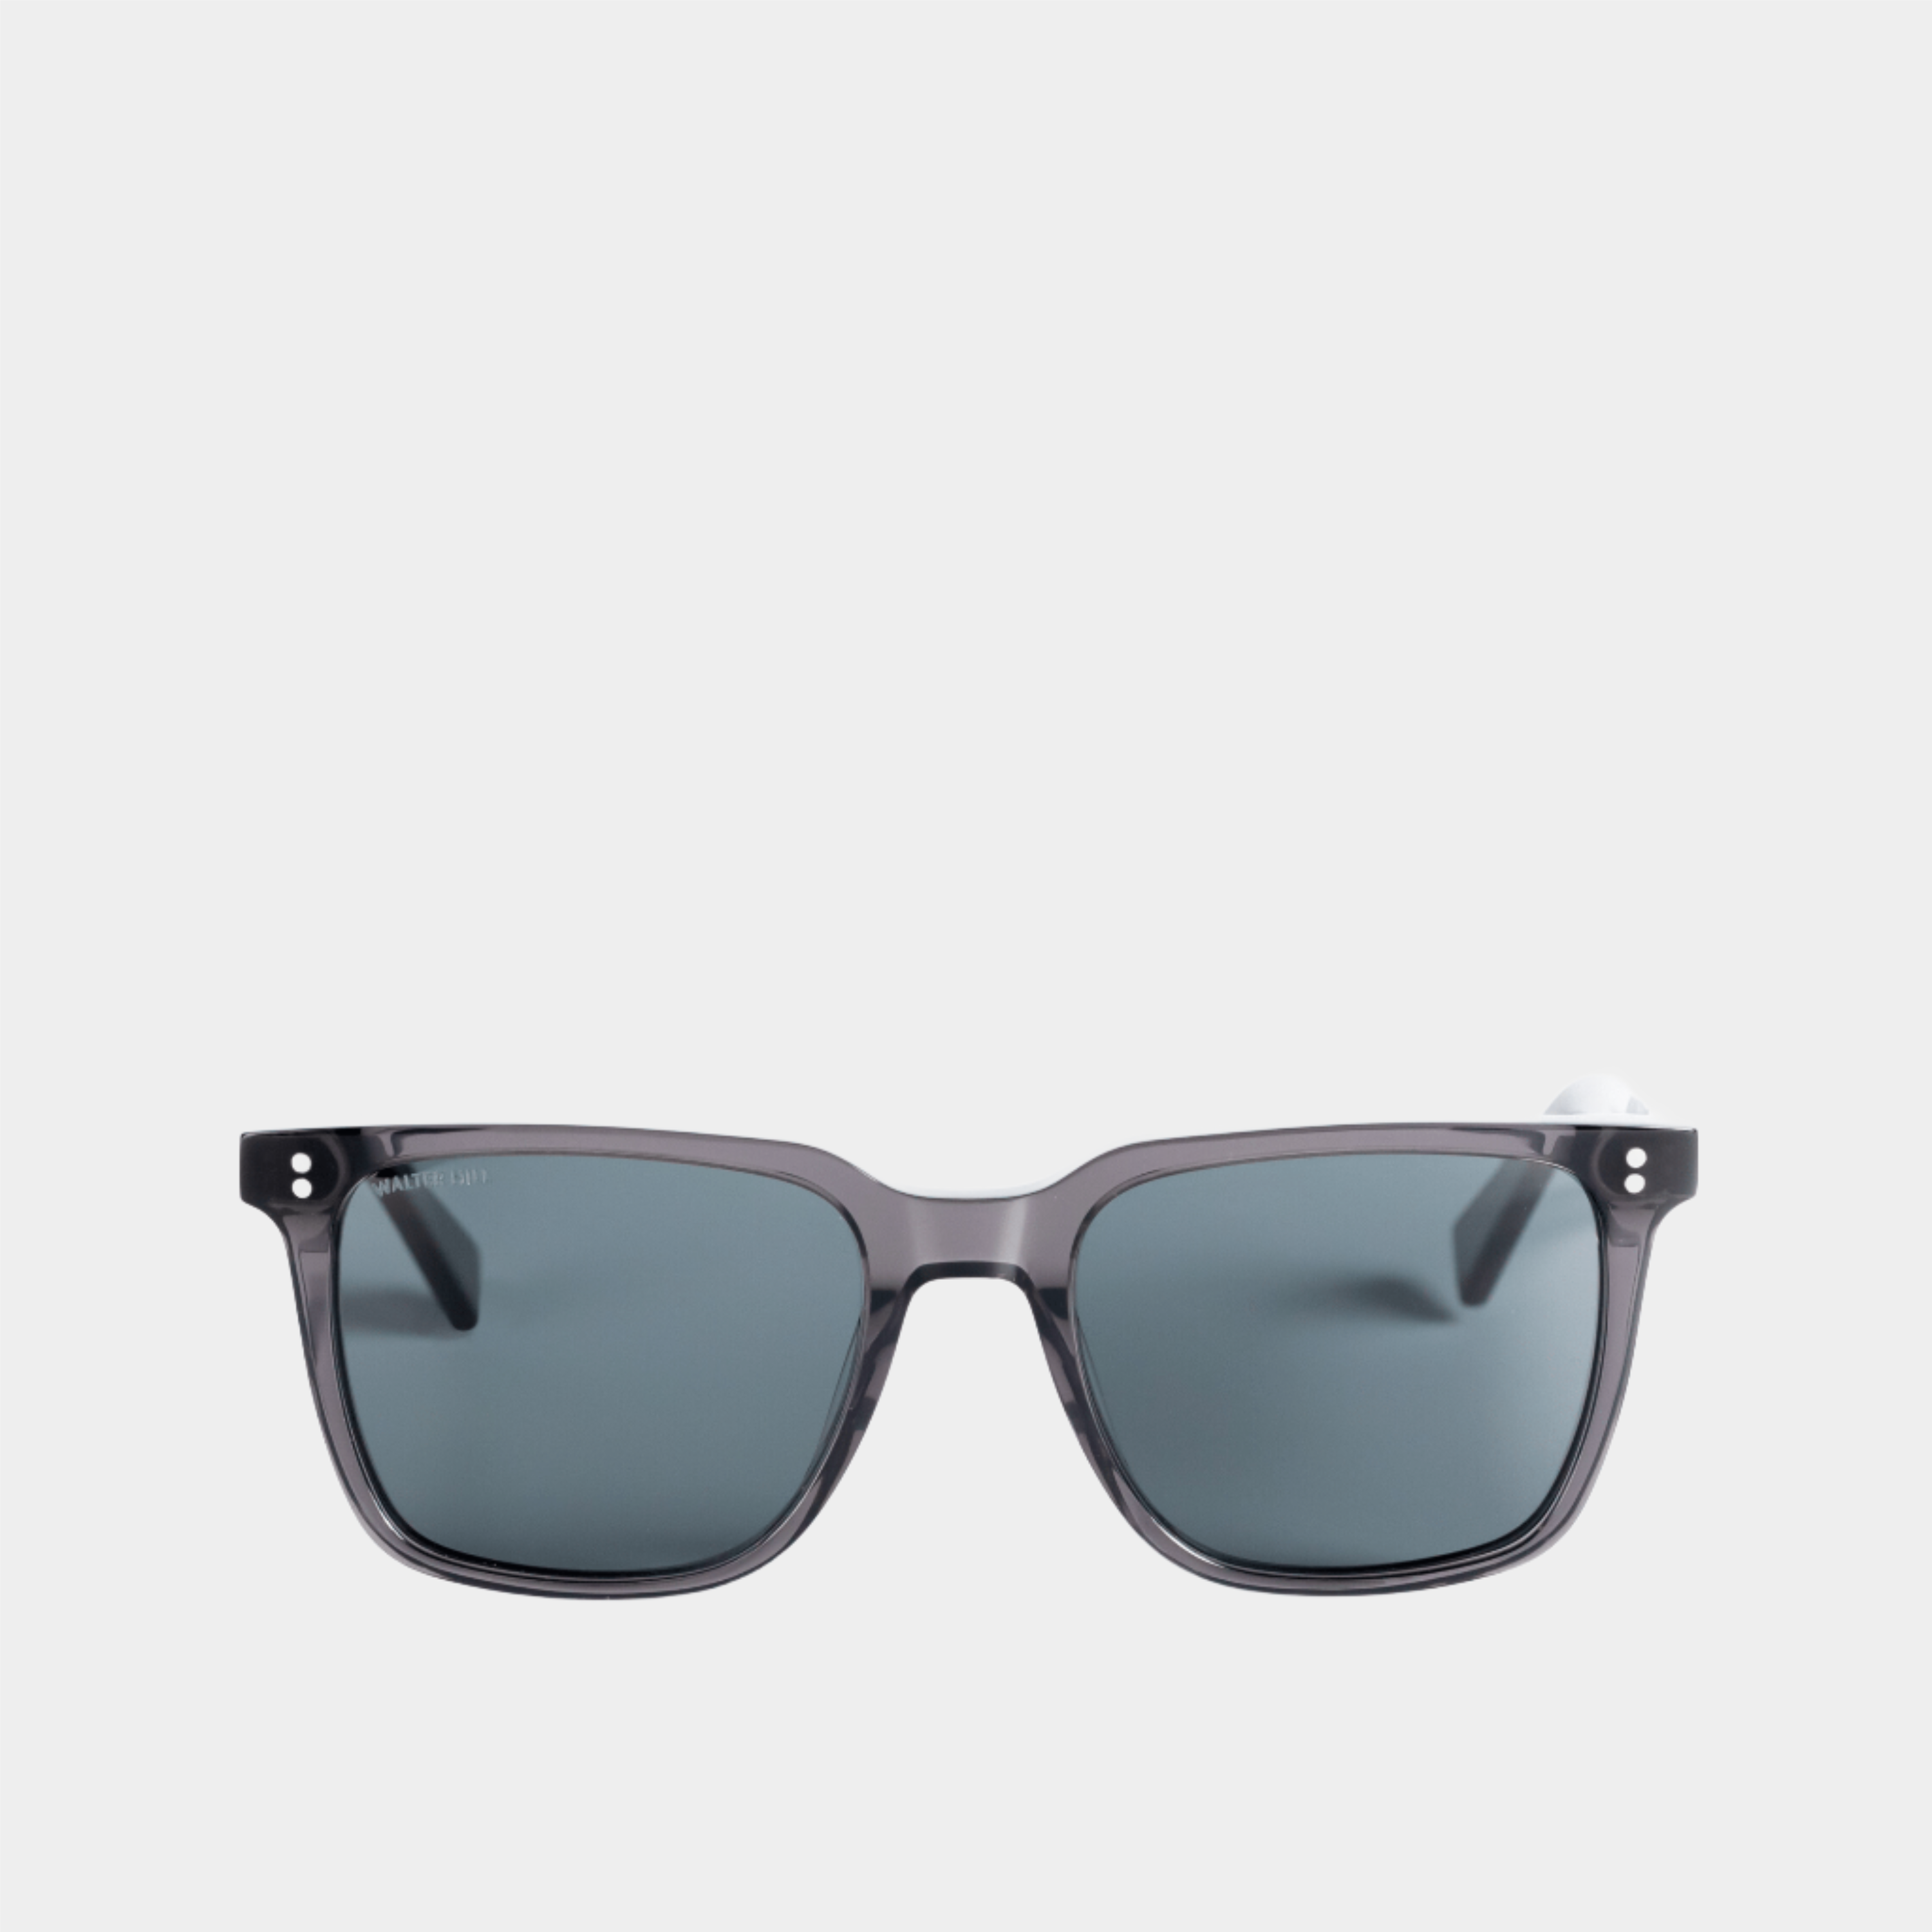 Walter Hill Sunglasses Gray / Standard / Polarized Cat.3 MARSON - Dark Gray